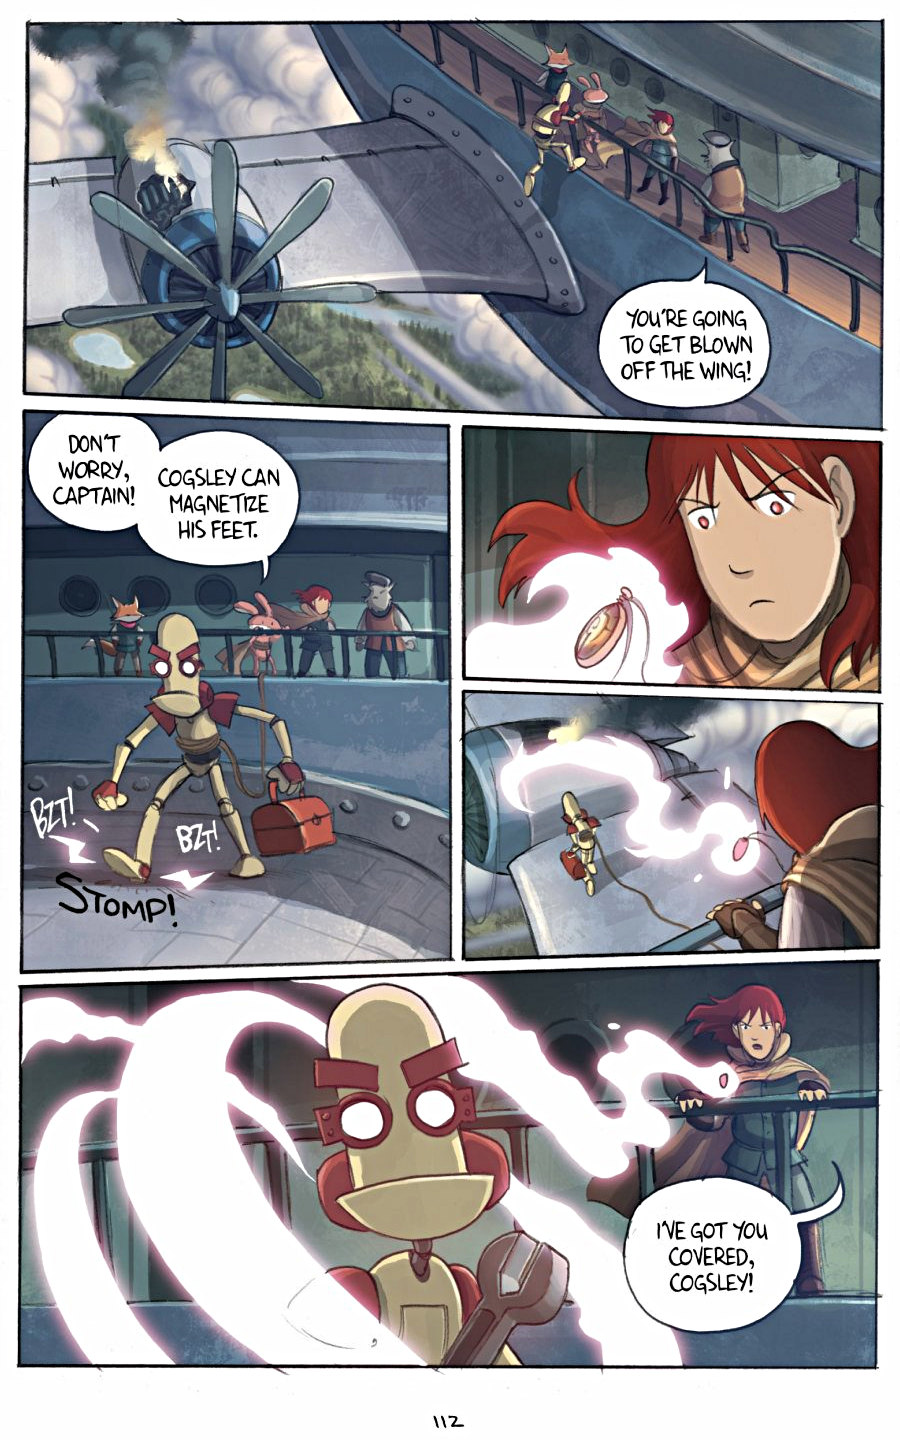 page 112 of amulet 3 cloud searchers graphic novel by kazu kibuishi